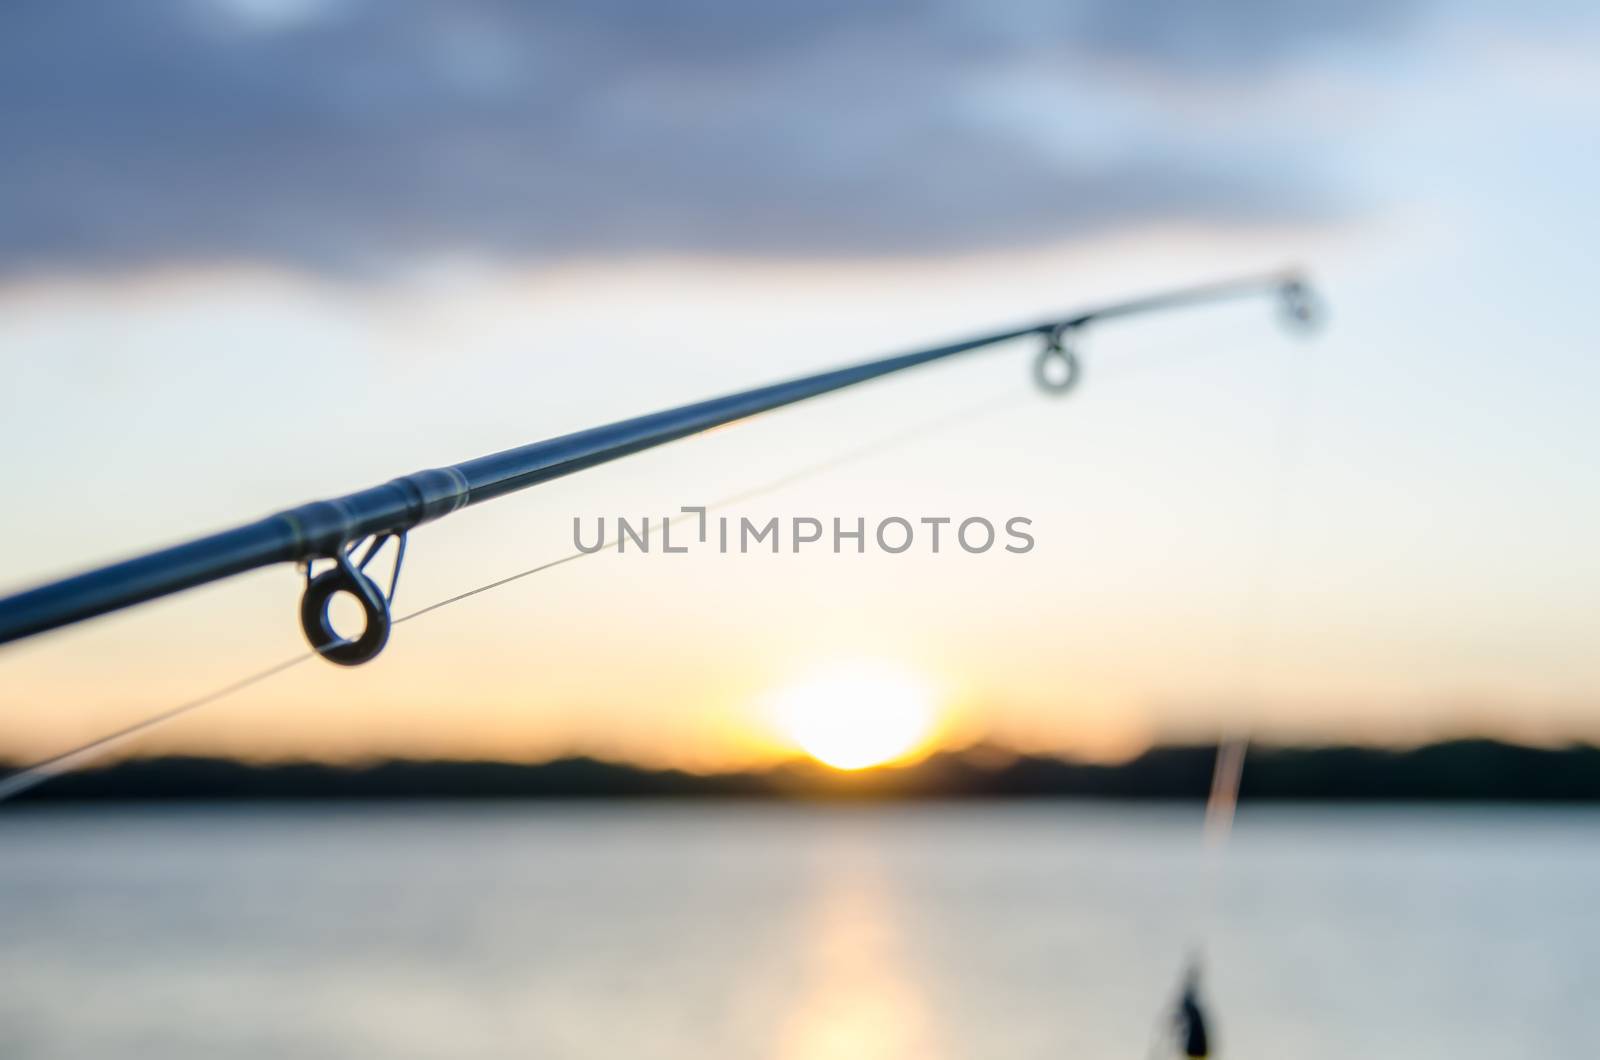 fishing on a lake before sunset by digidreamgrafix